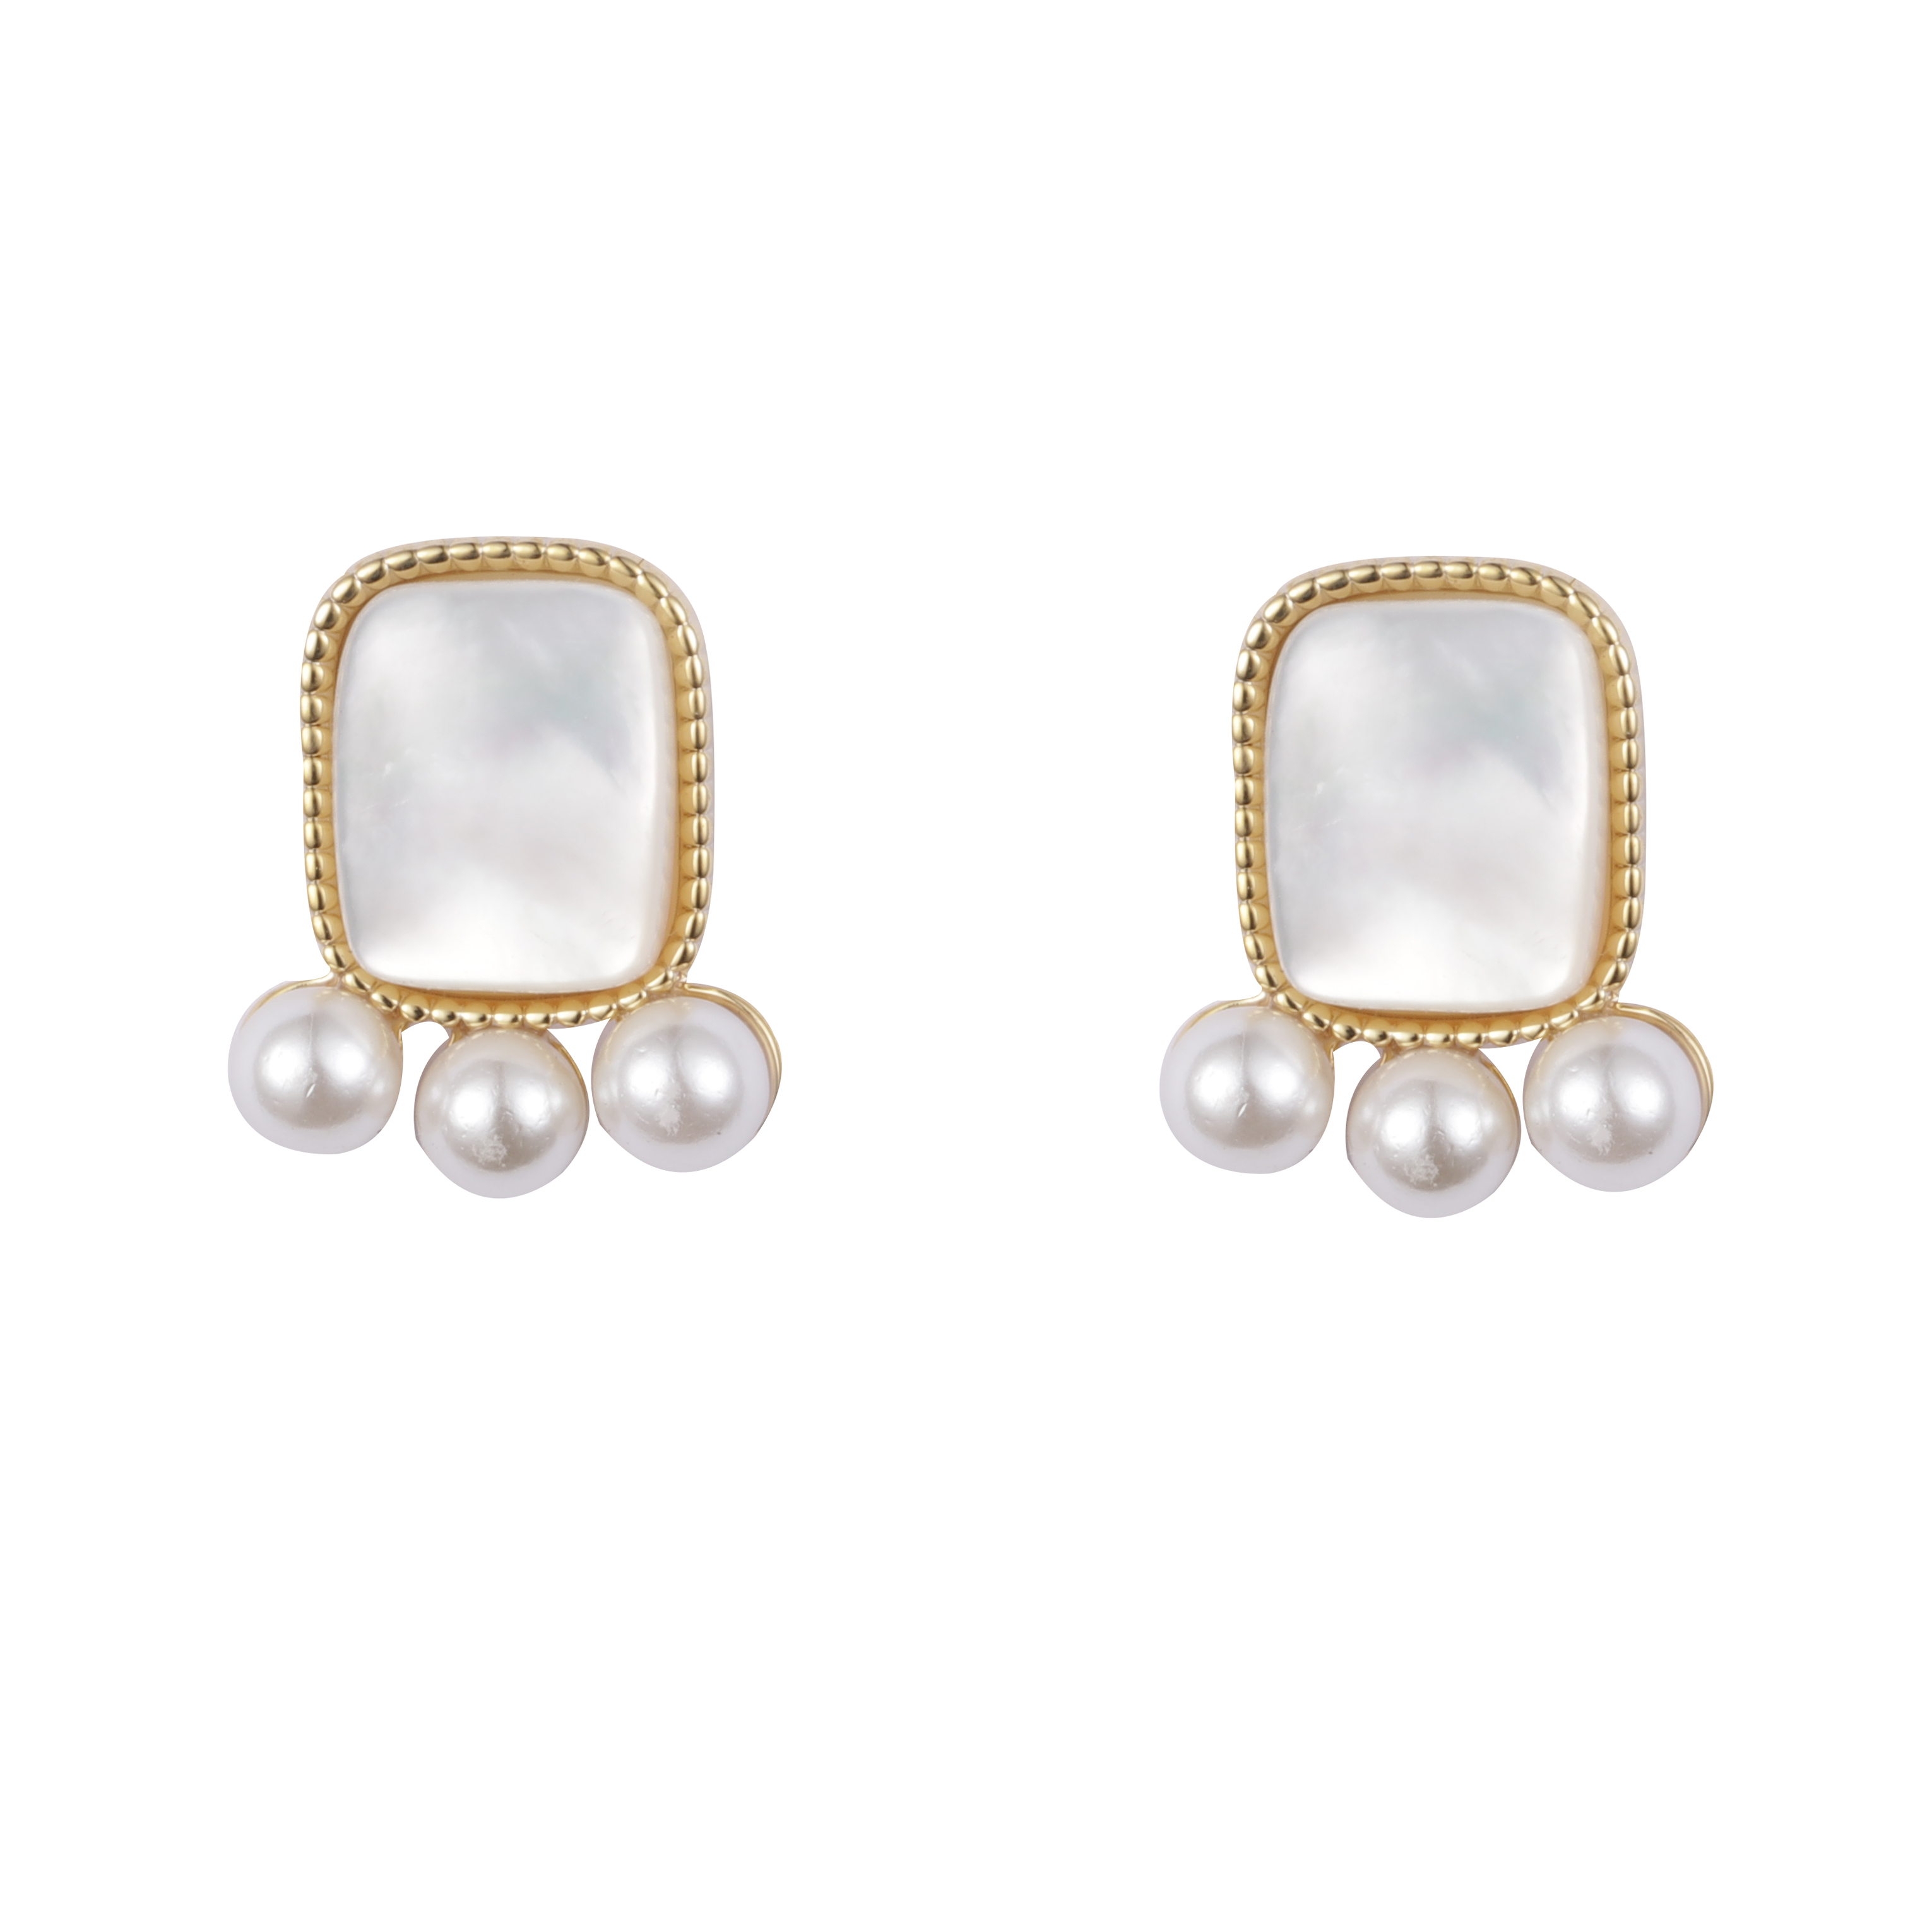 Elegant Pearl Fashion Earrings Studs Gold Plated Jewellery